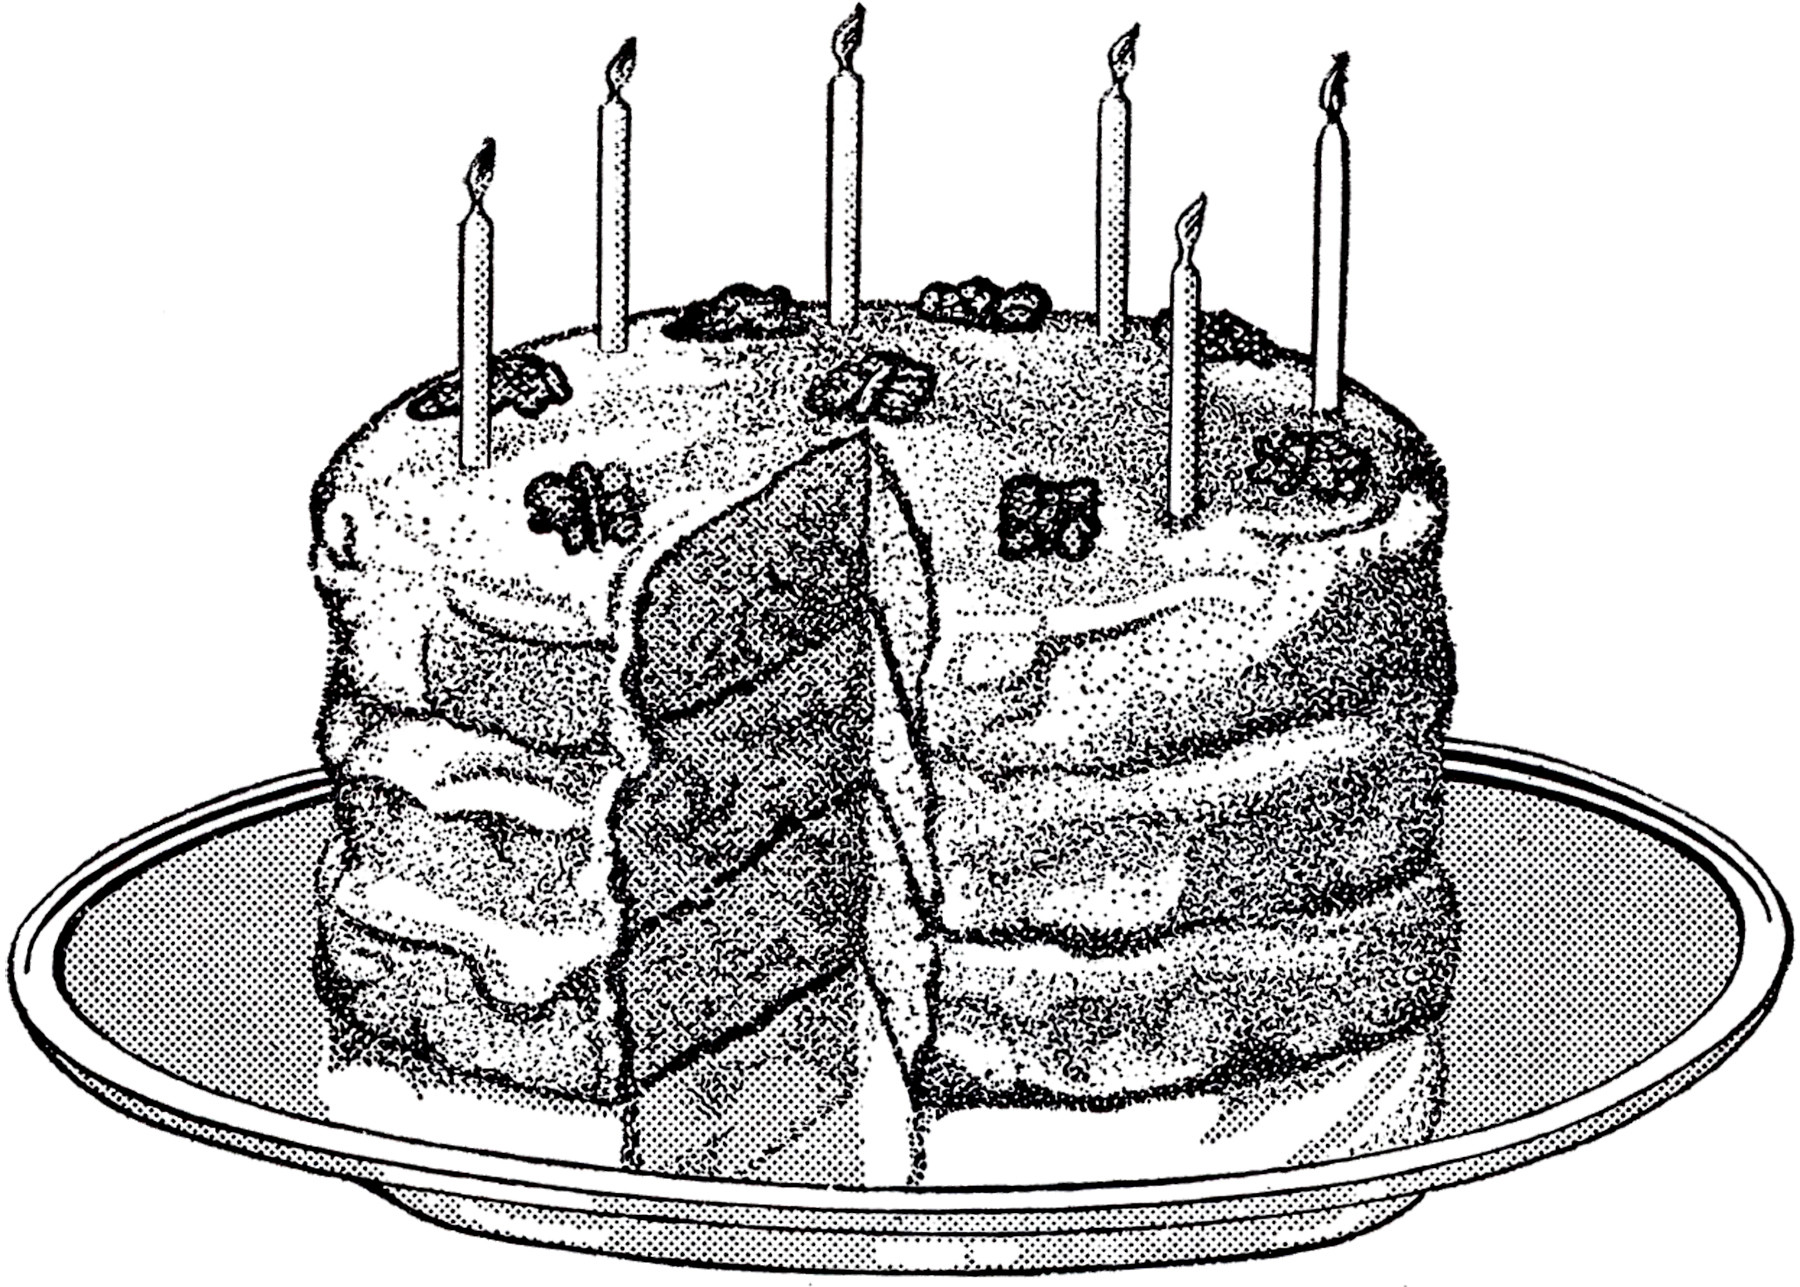 Birthday Cake Illustration
 Vintage Birthday Cake Image The Graphics Fairy